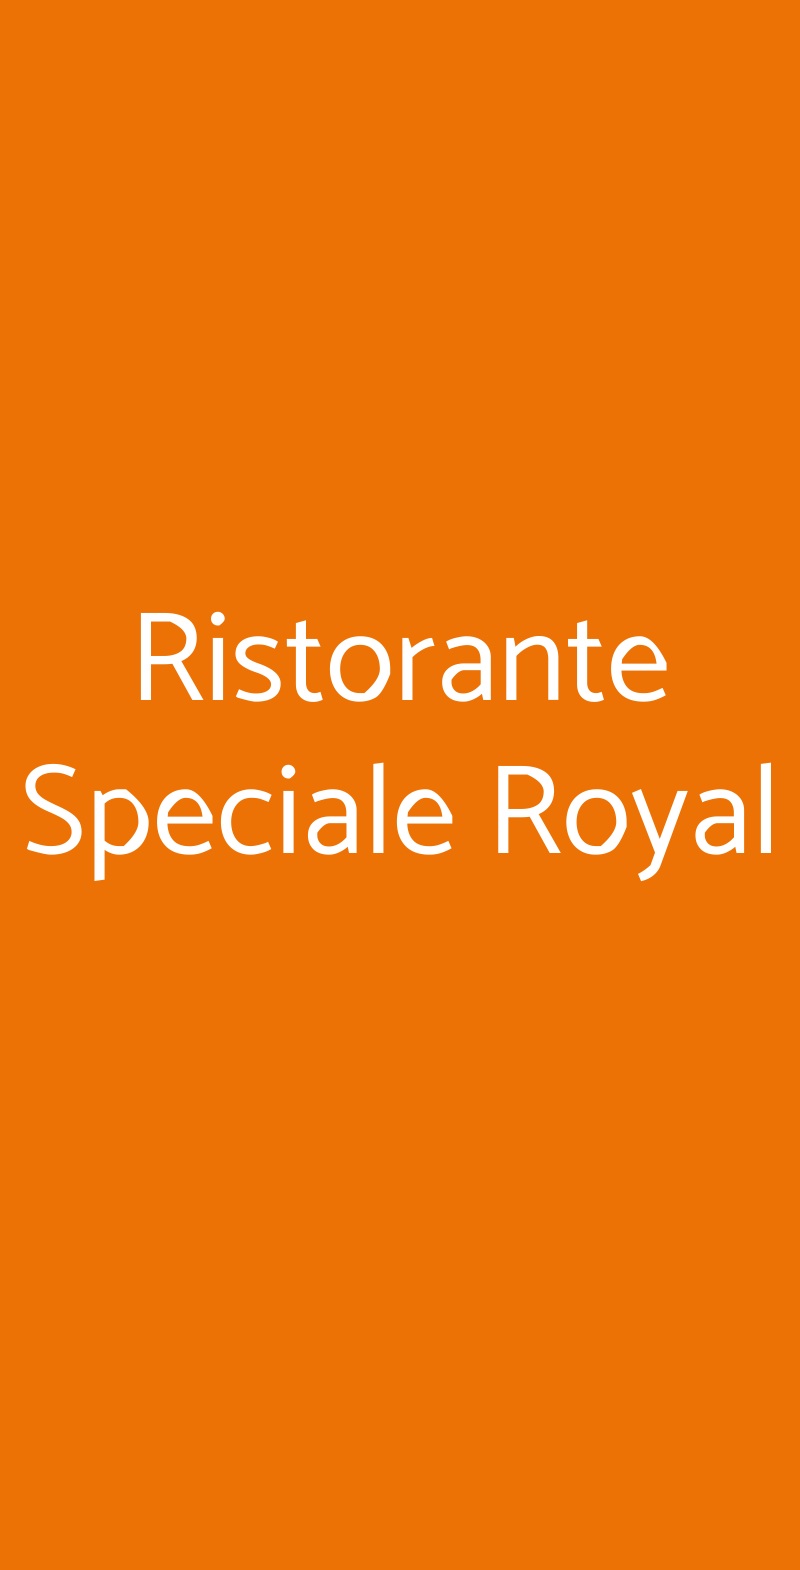 Ristorante Speciale Royal Milano menù 1 pagina